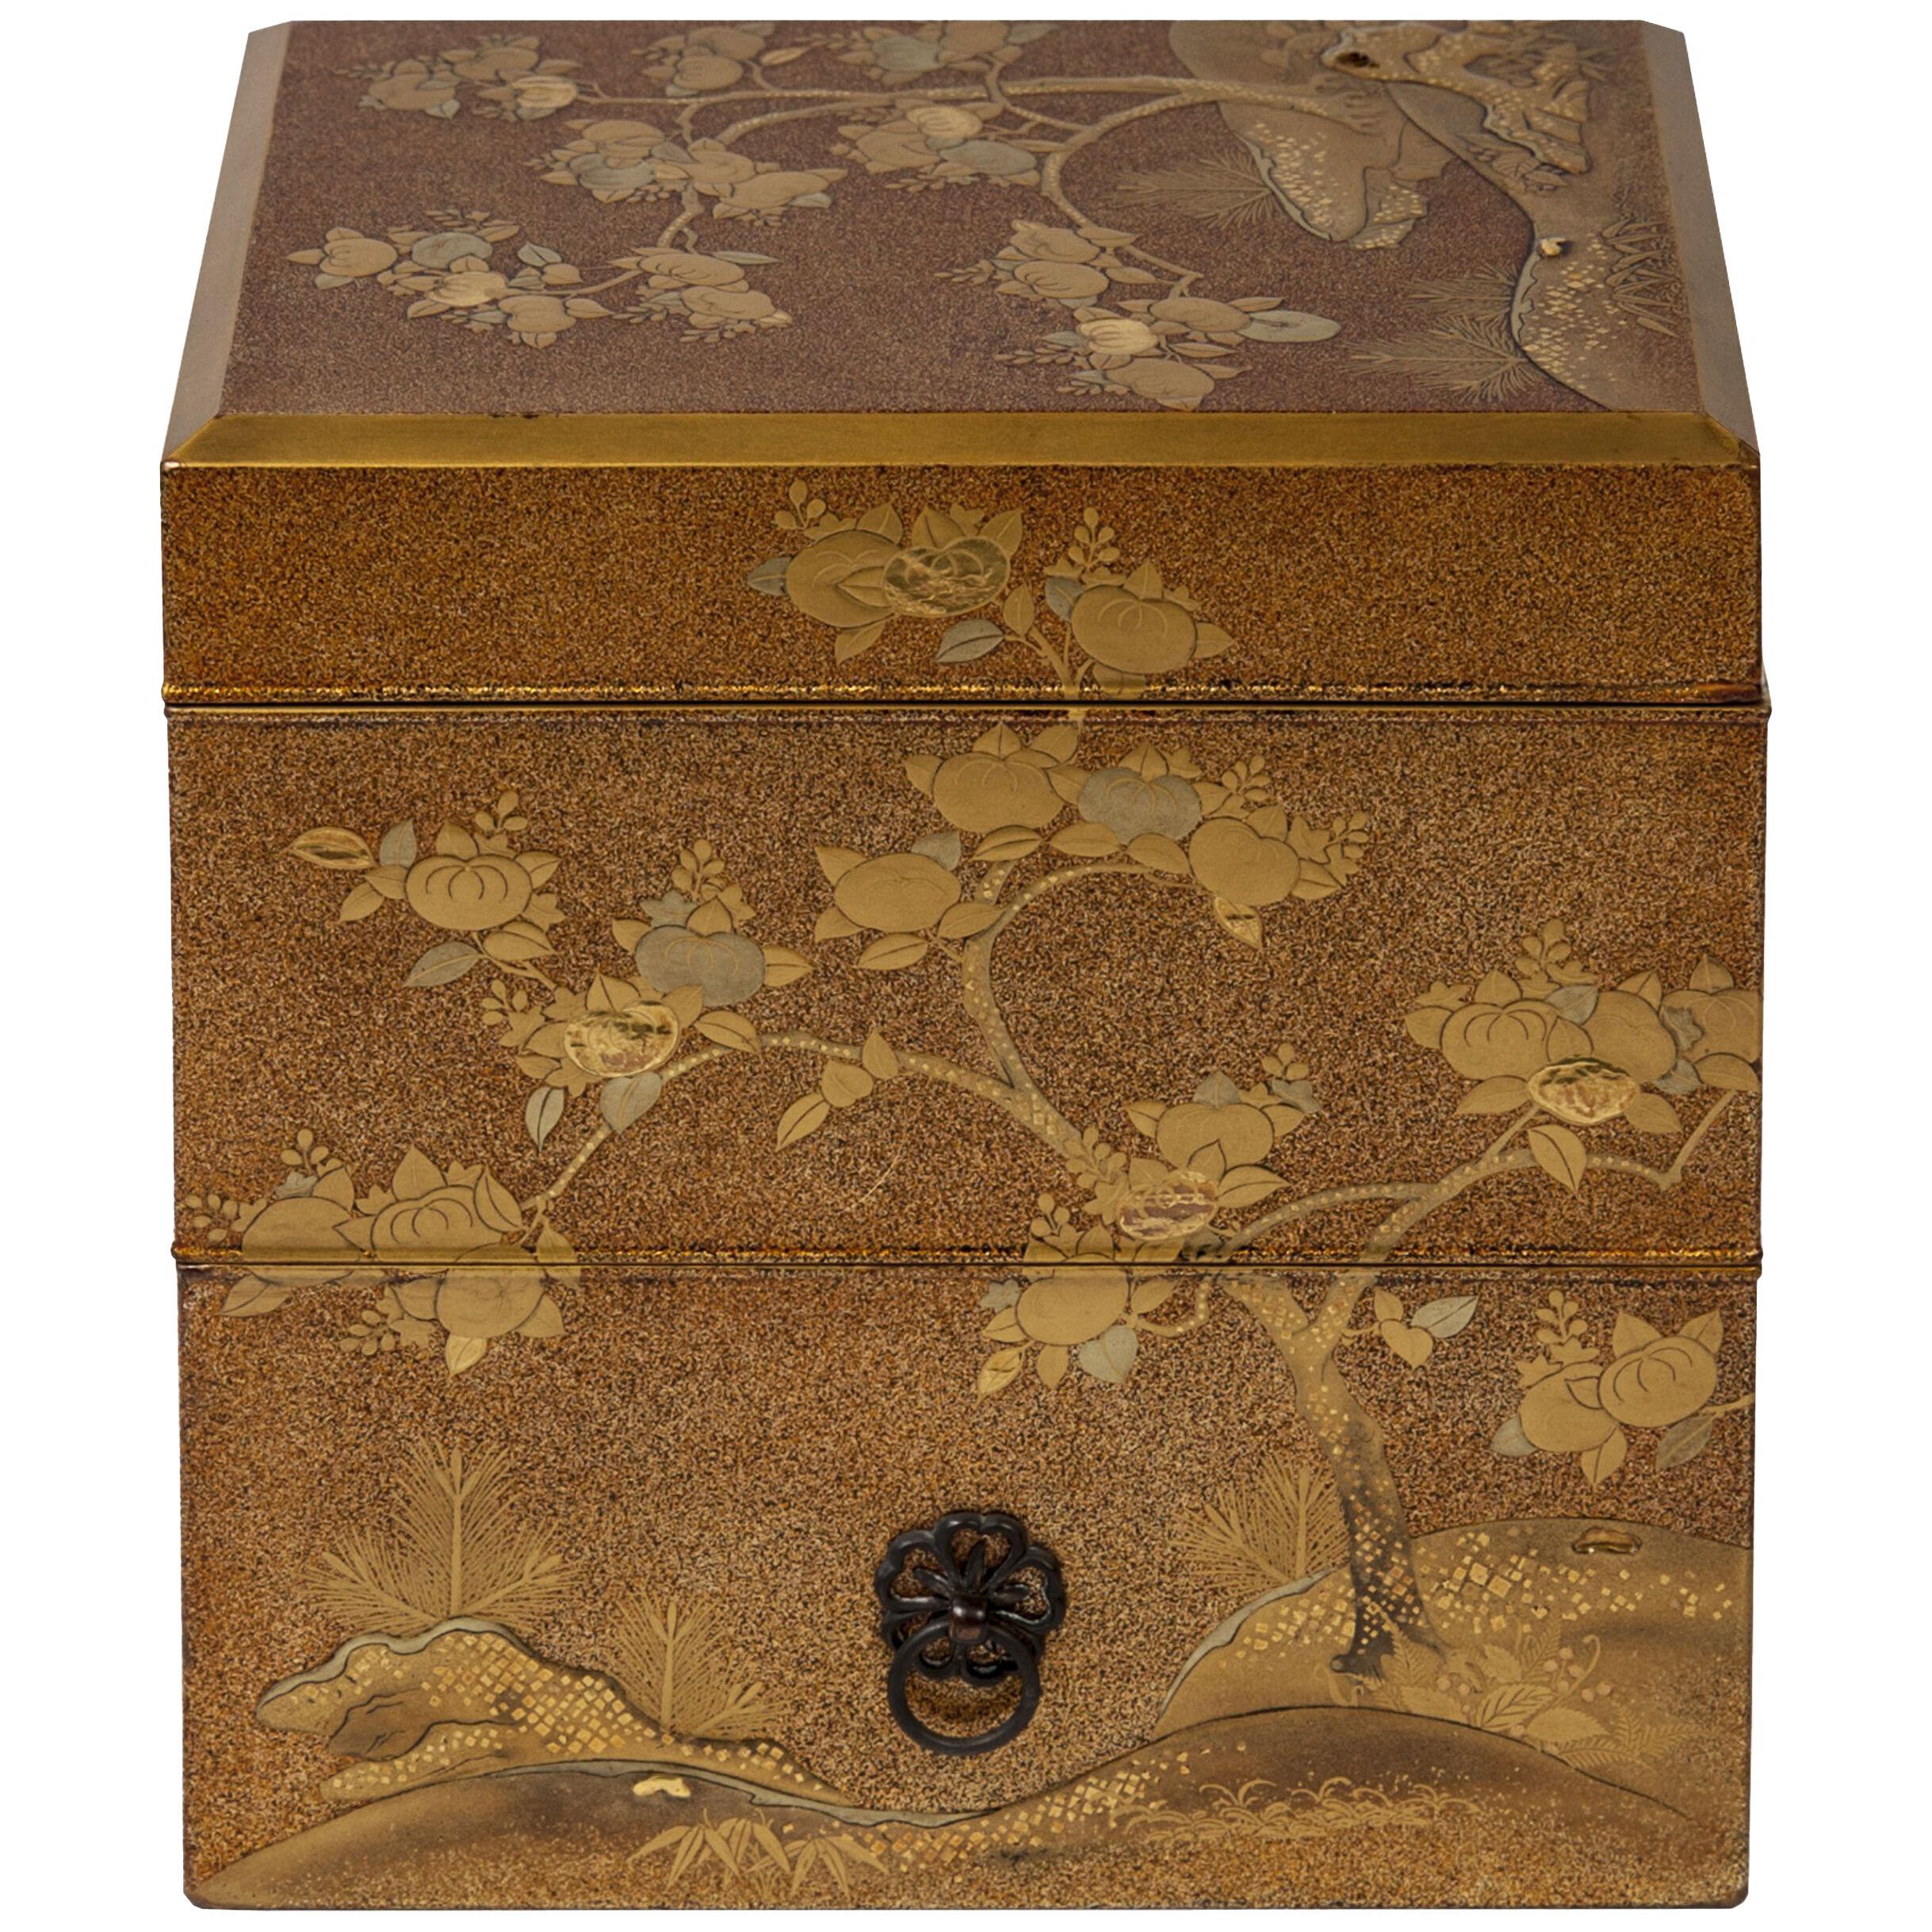 Japanese gold lacquer toilet box (tebako)